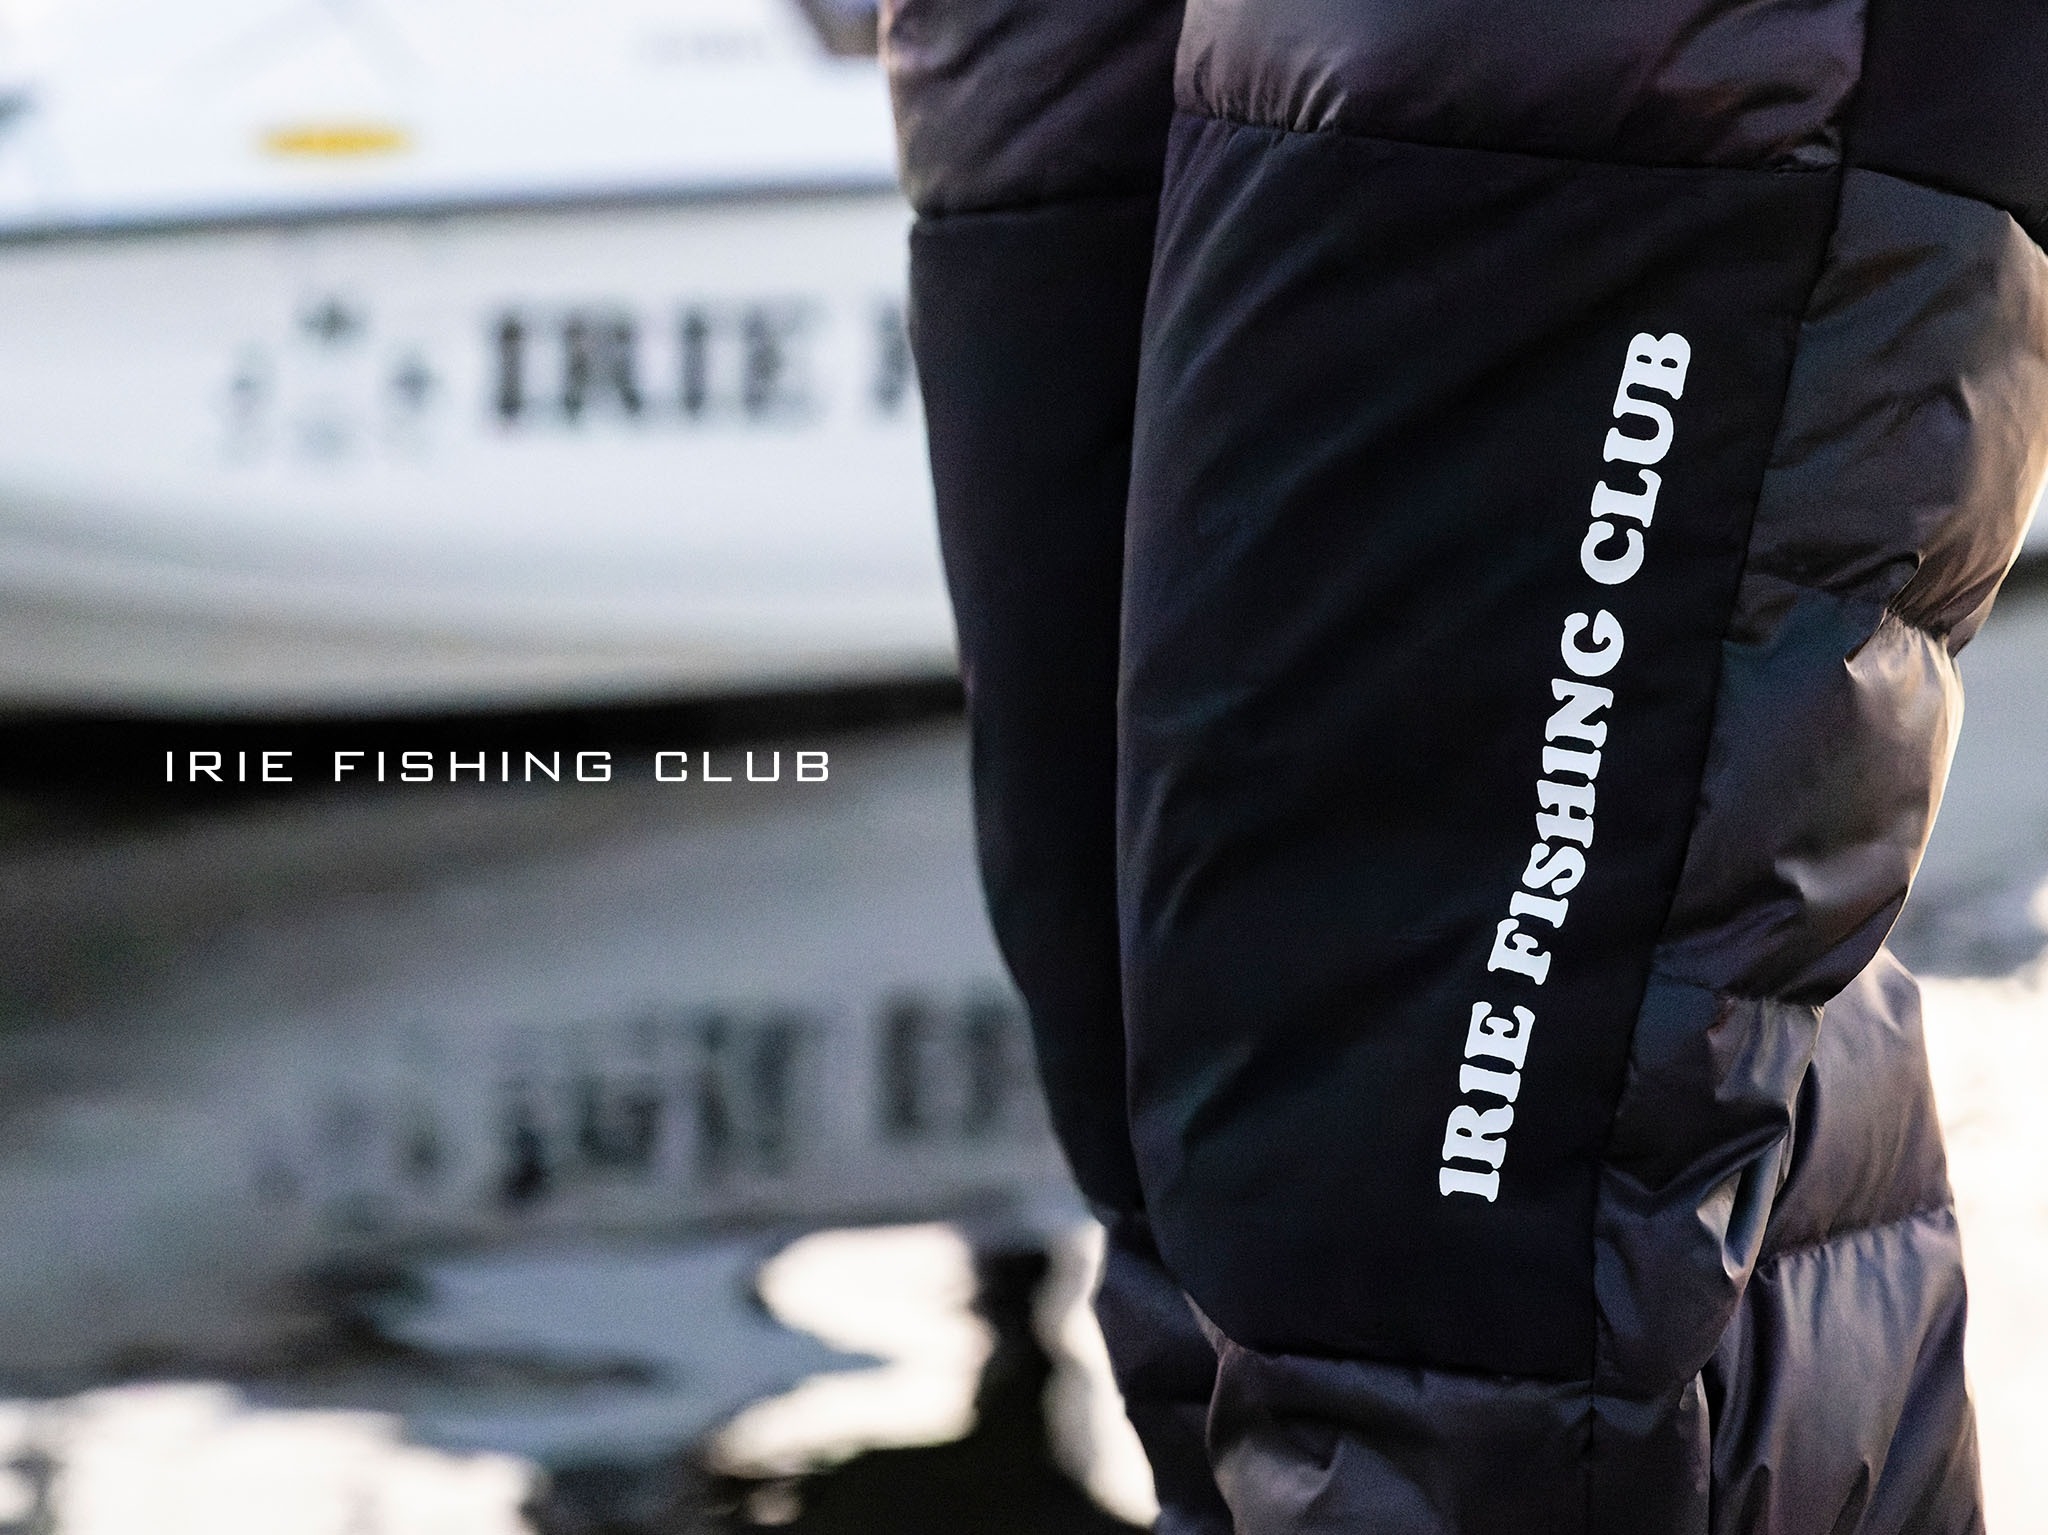 IRIE FISHING CLUB DOWN PANTS